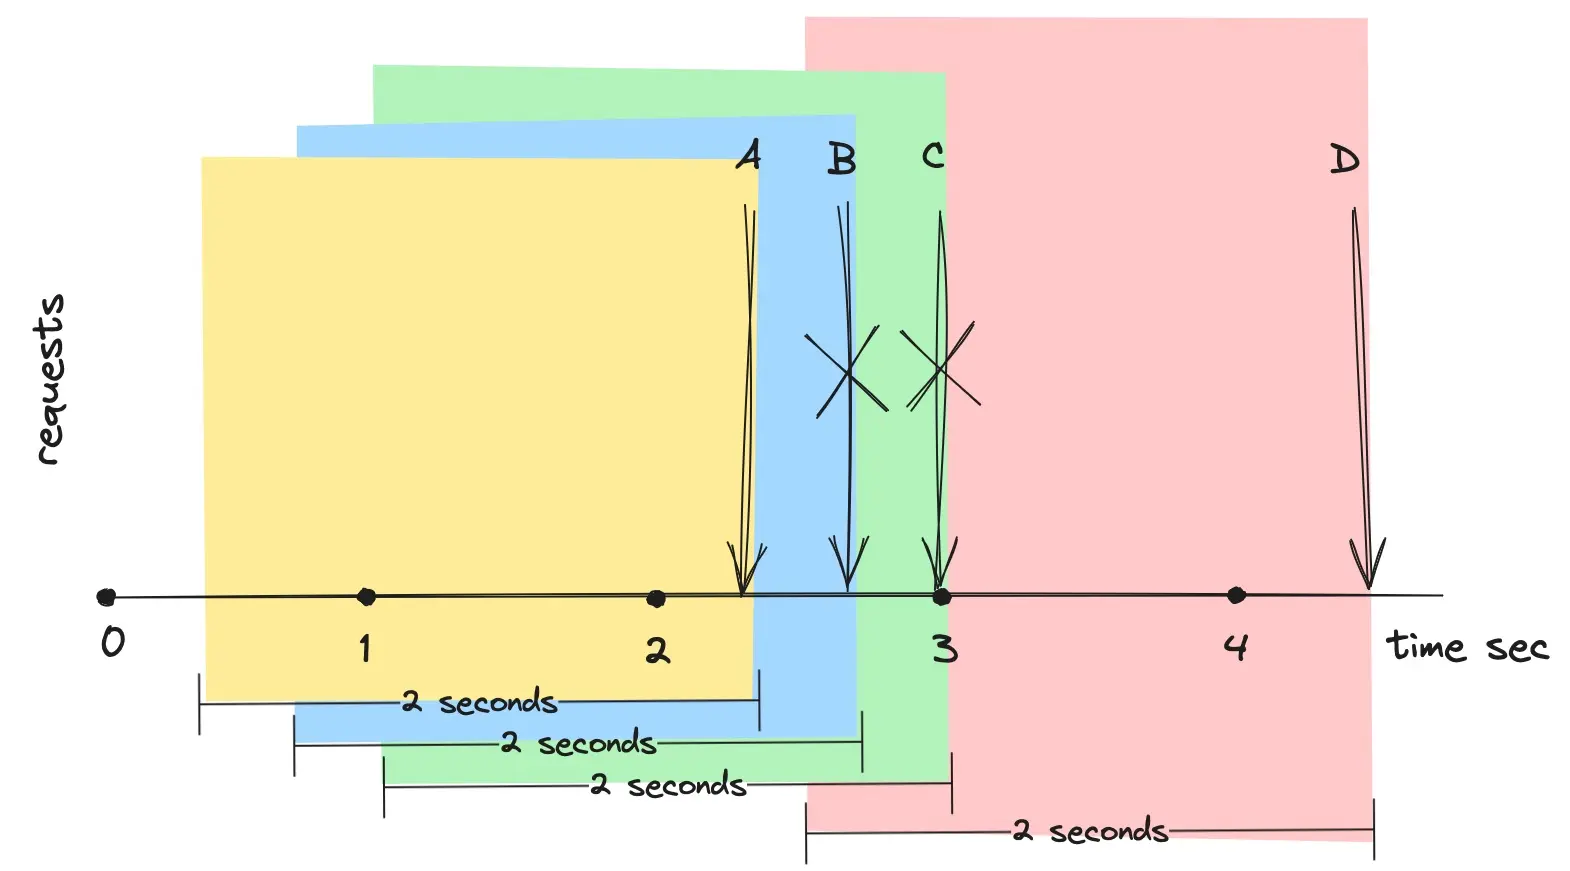 Figure 1. Sliding Window Algorithm in Action